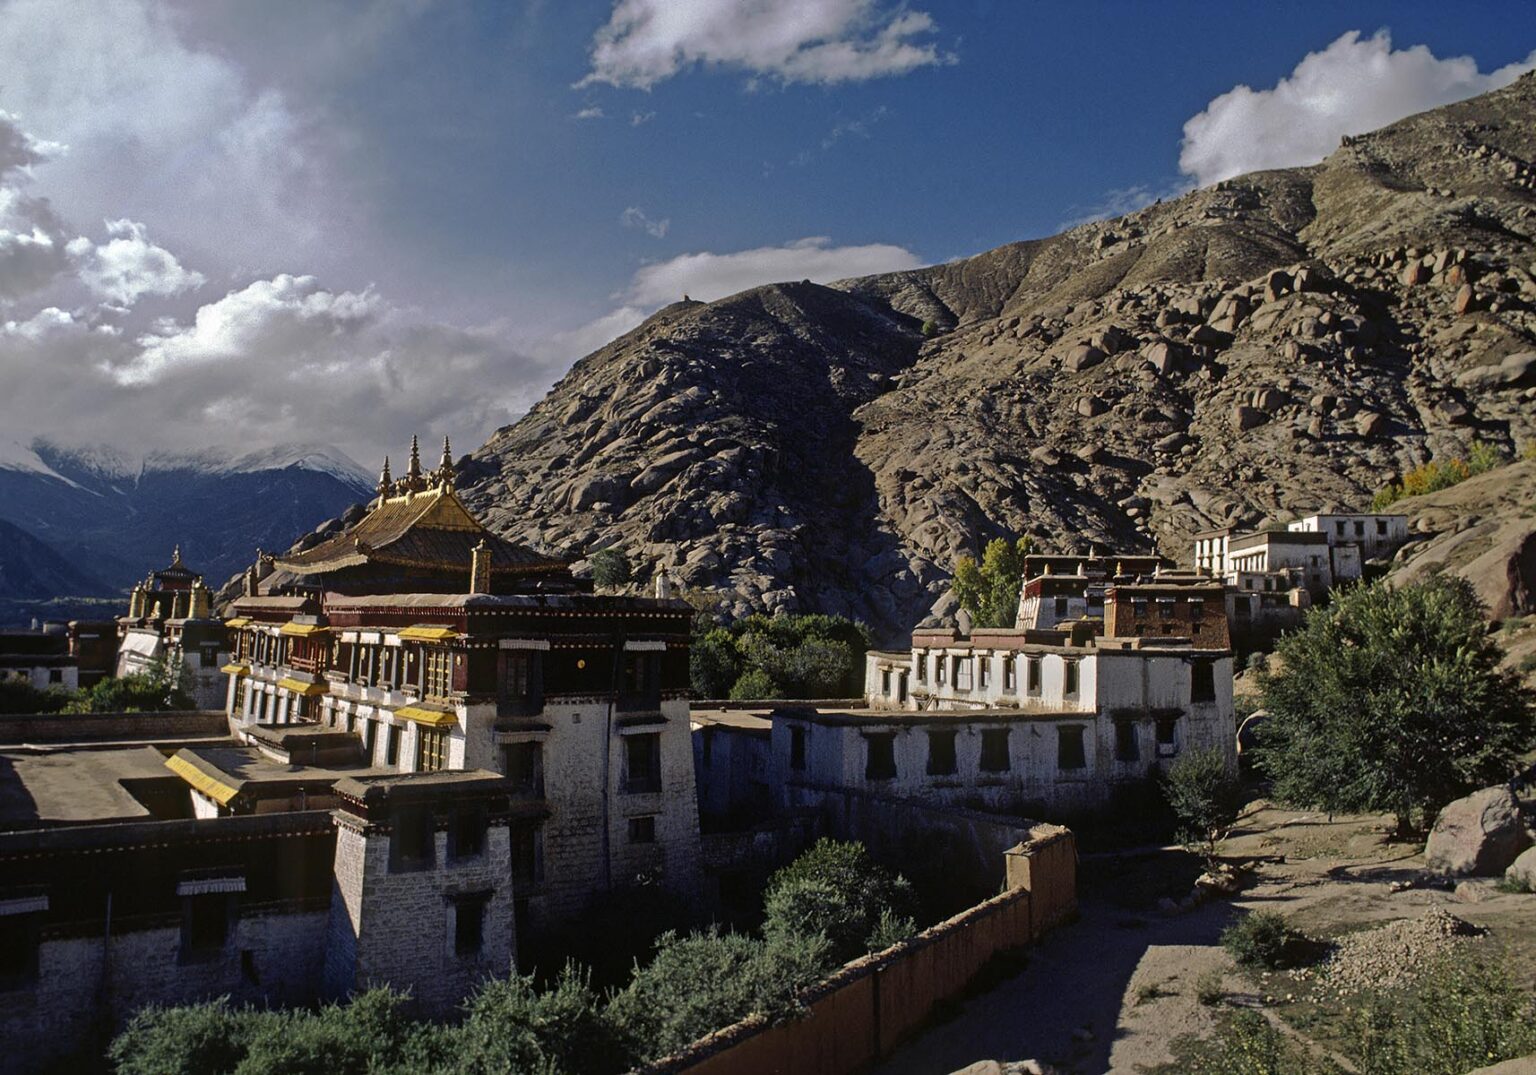 Sera Monastery - Lhasa, Tibet